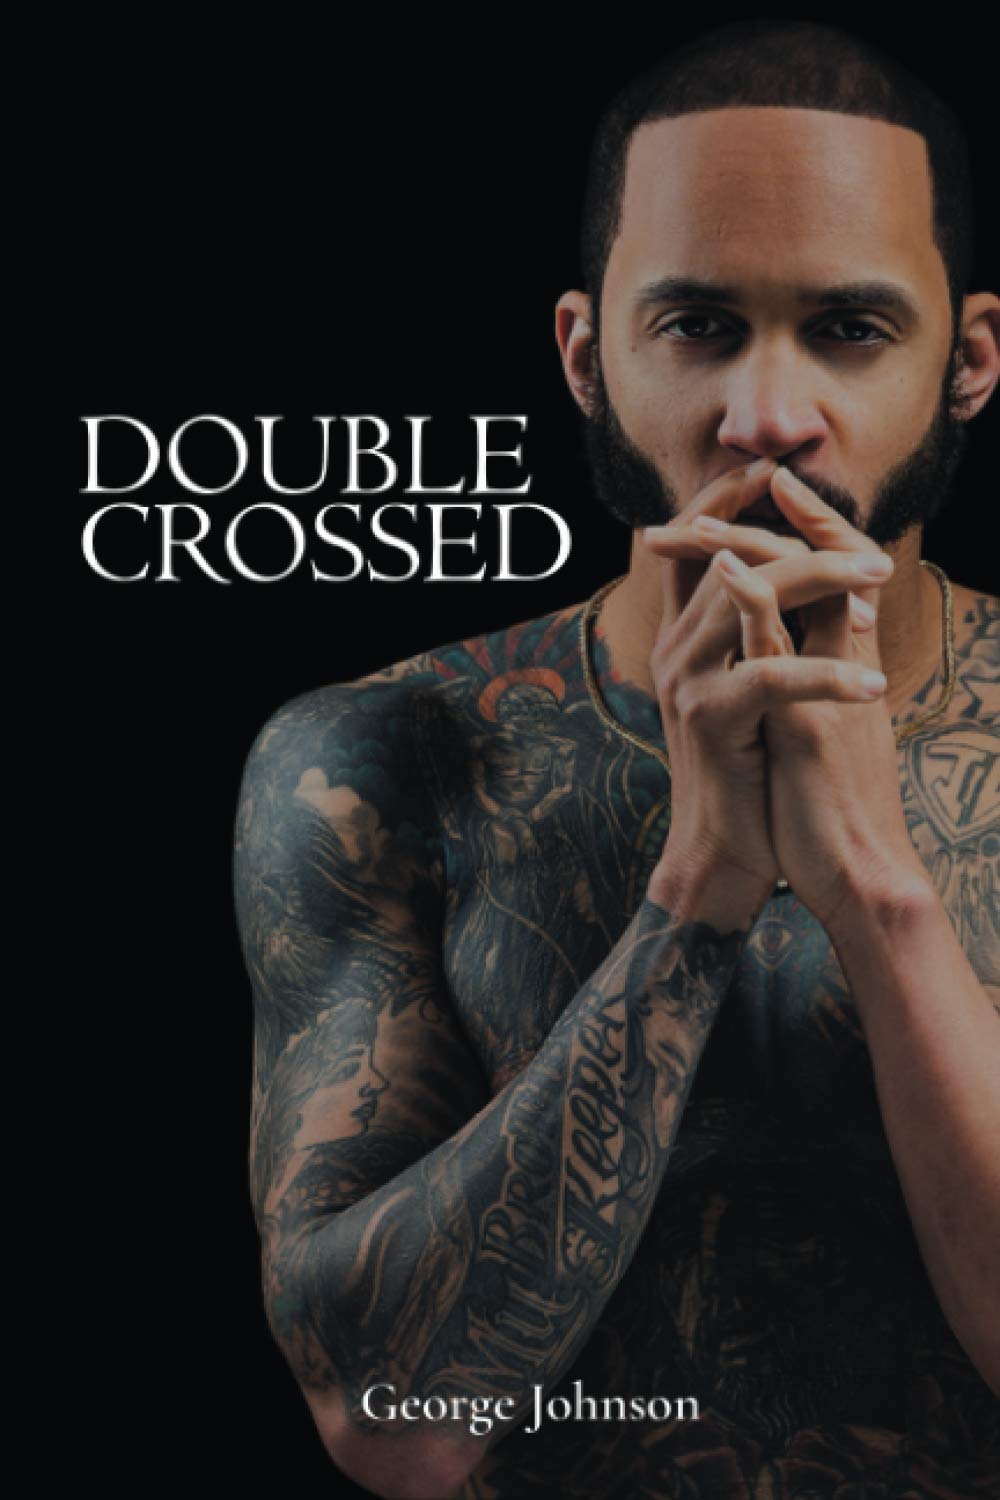 Double Crossed: A Memoir by George Johnson